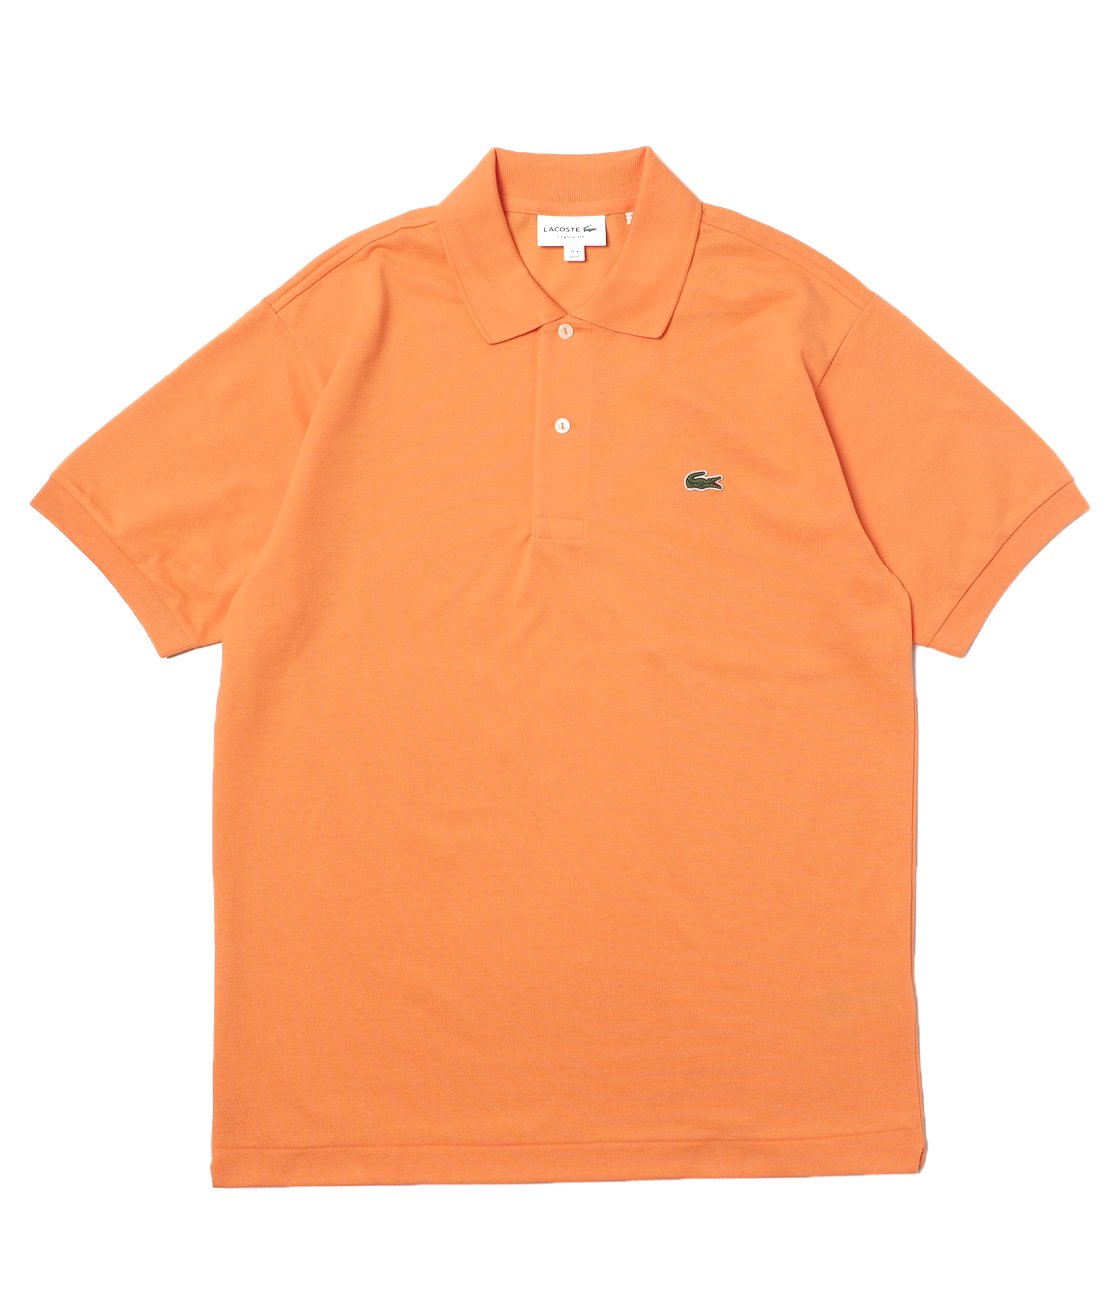 LACOSTE】L1212 S/S CLASSIC PIQUET POLO - ORANGE ポロシャツ